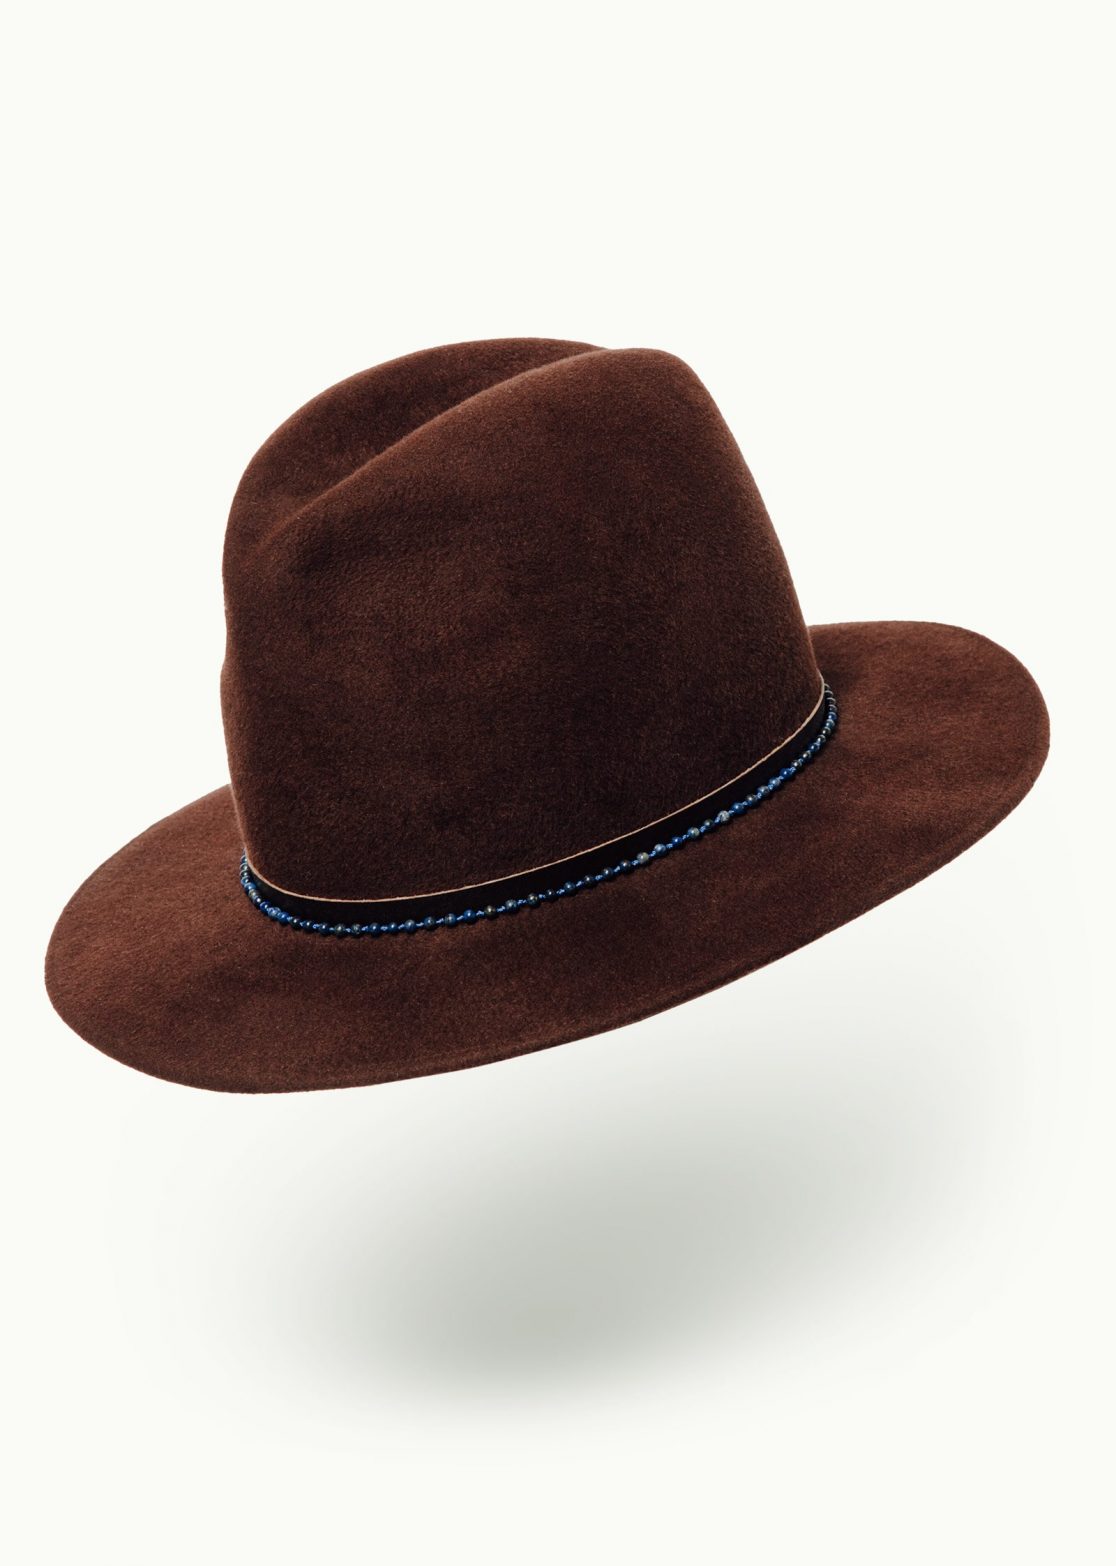 Hats - Women - Unisex - Men - Olbers High & Wide Brown Chestnut Image Primary